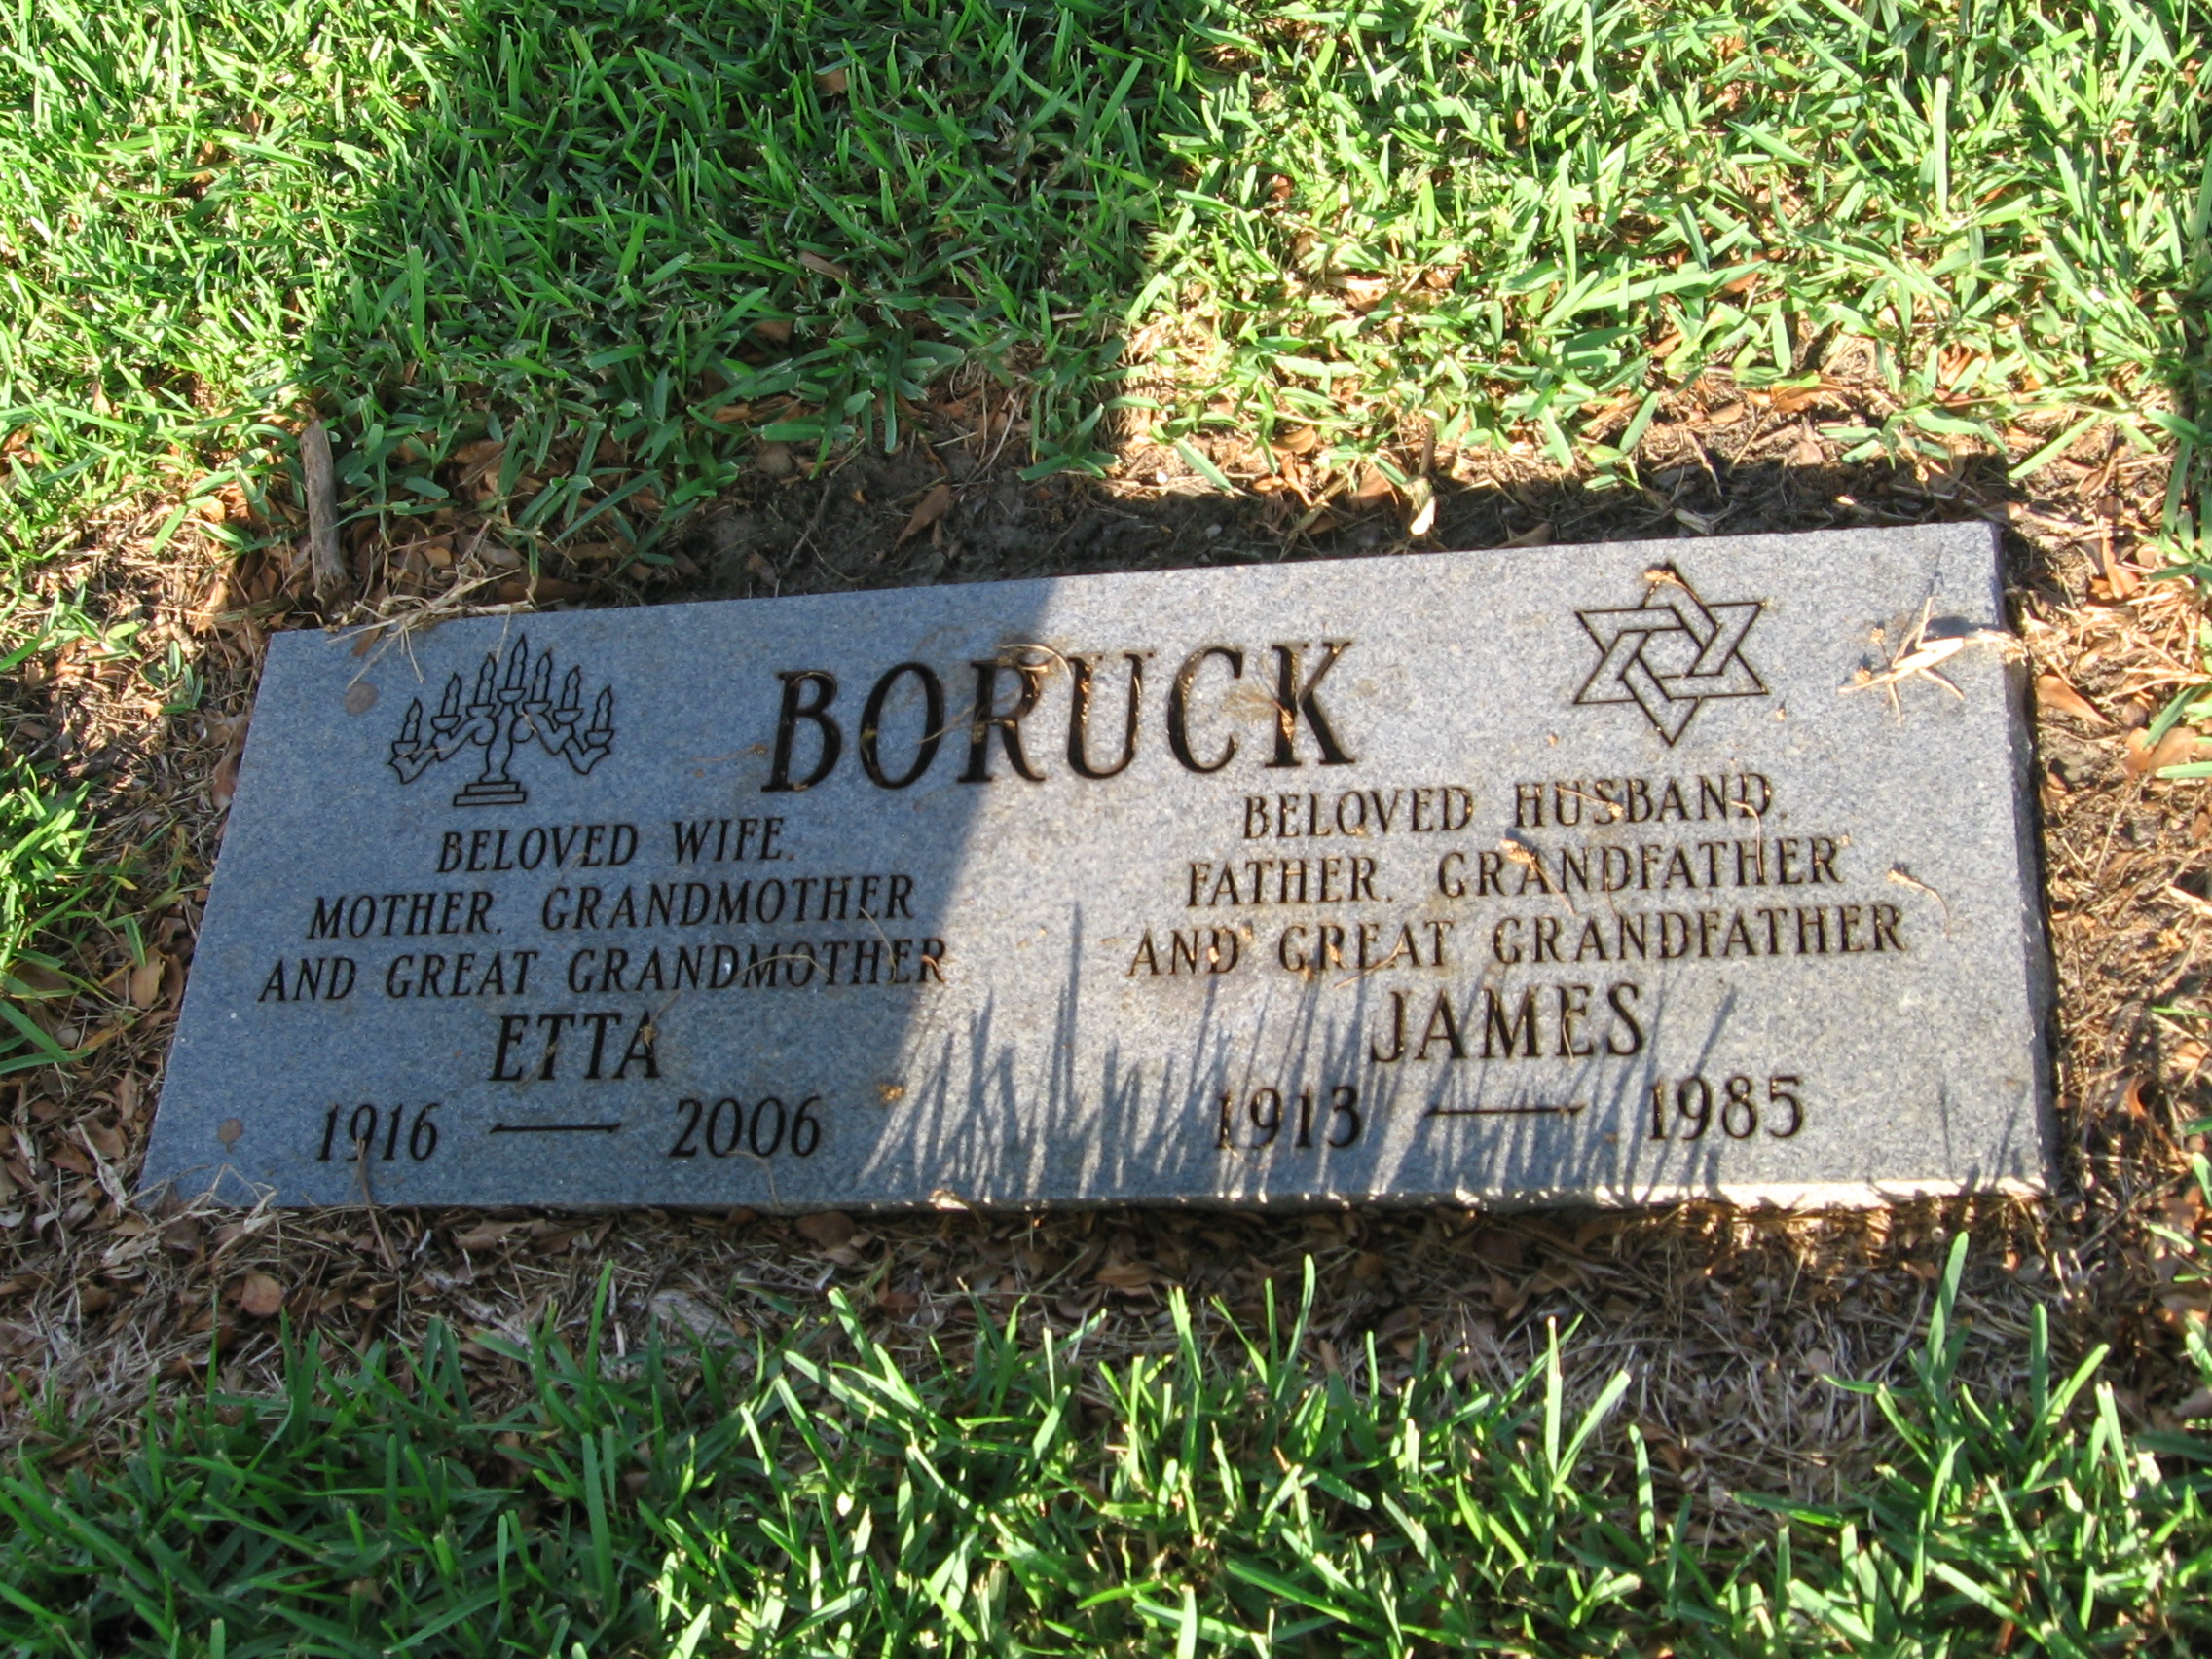 James Boruck